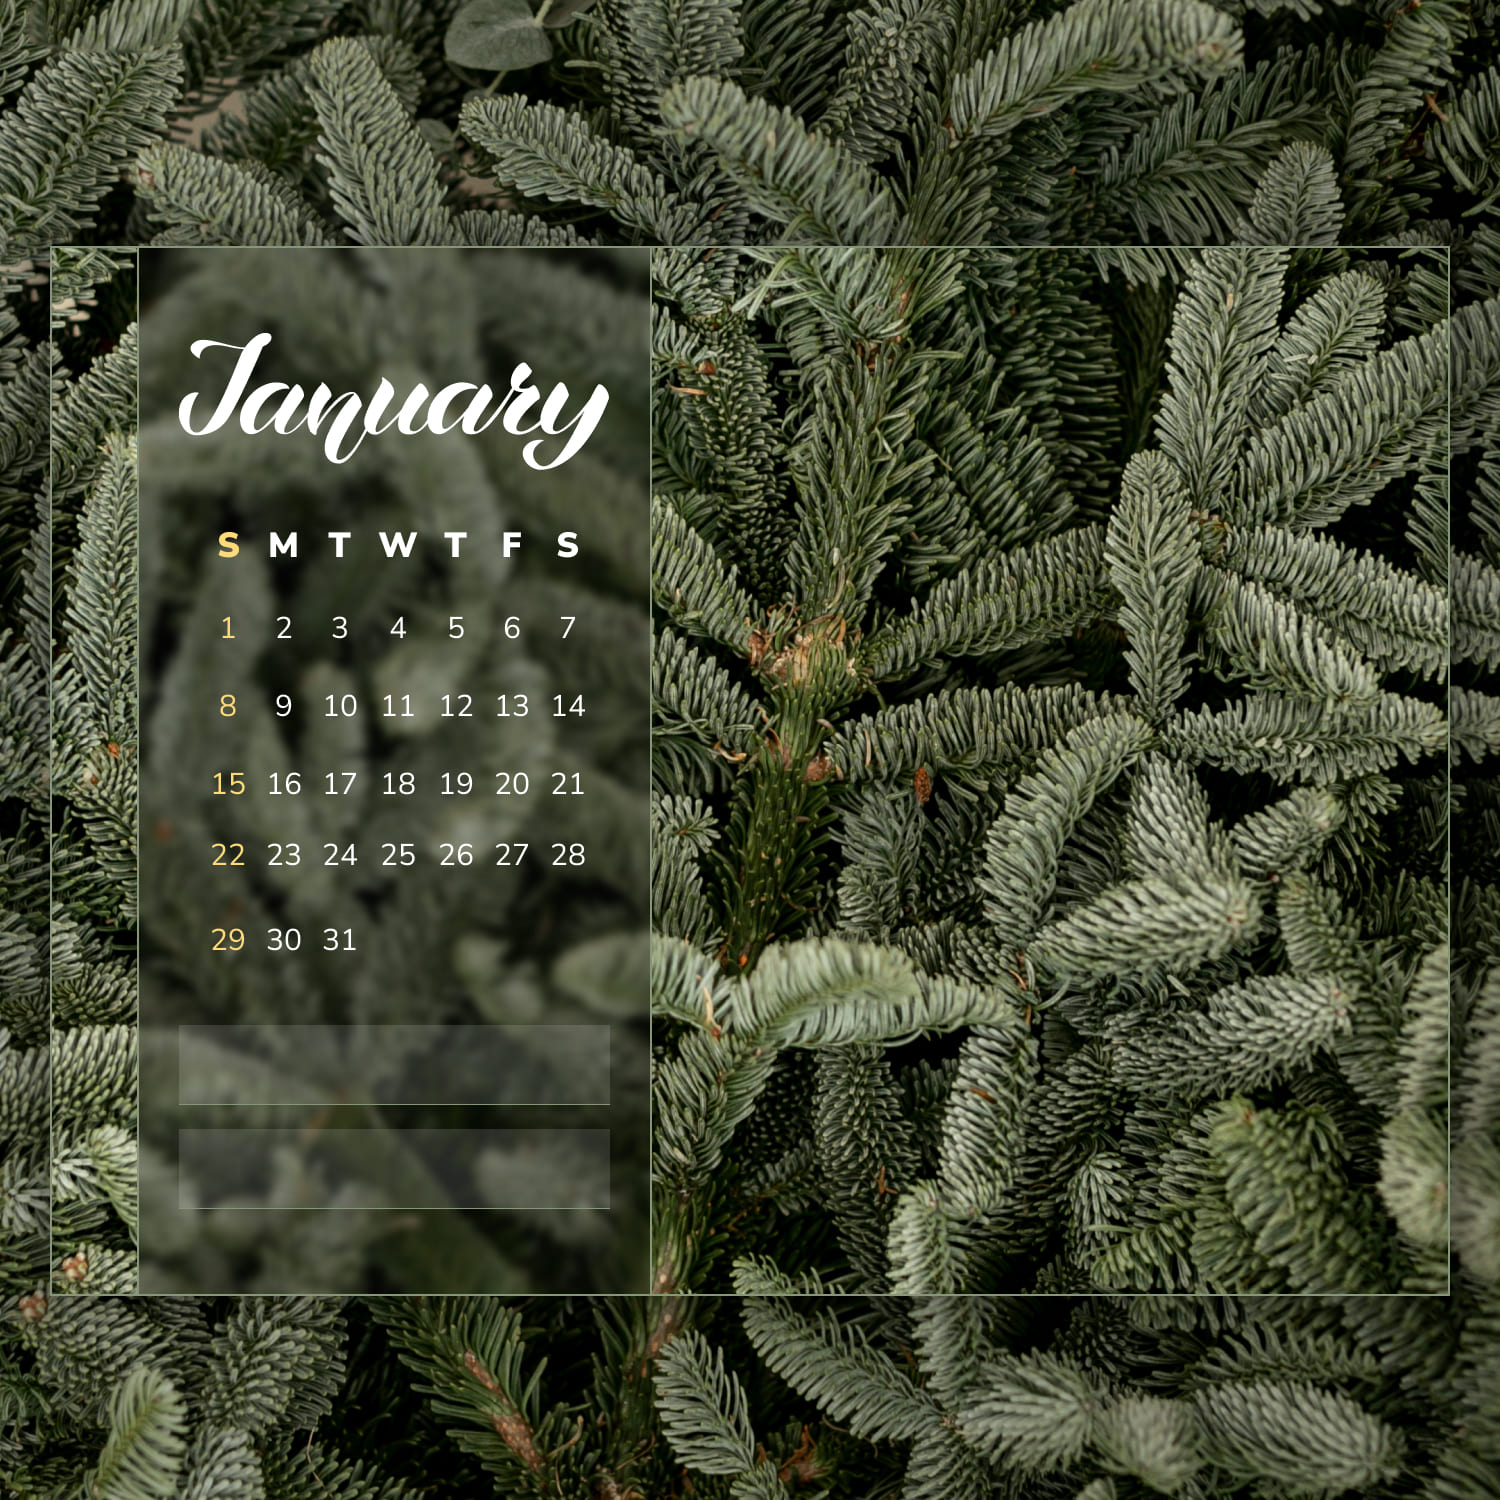 Free January Calendar Christmas Tree cover.